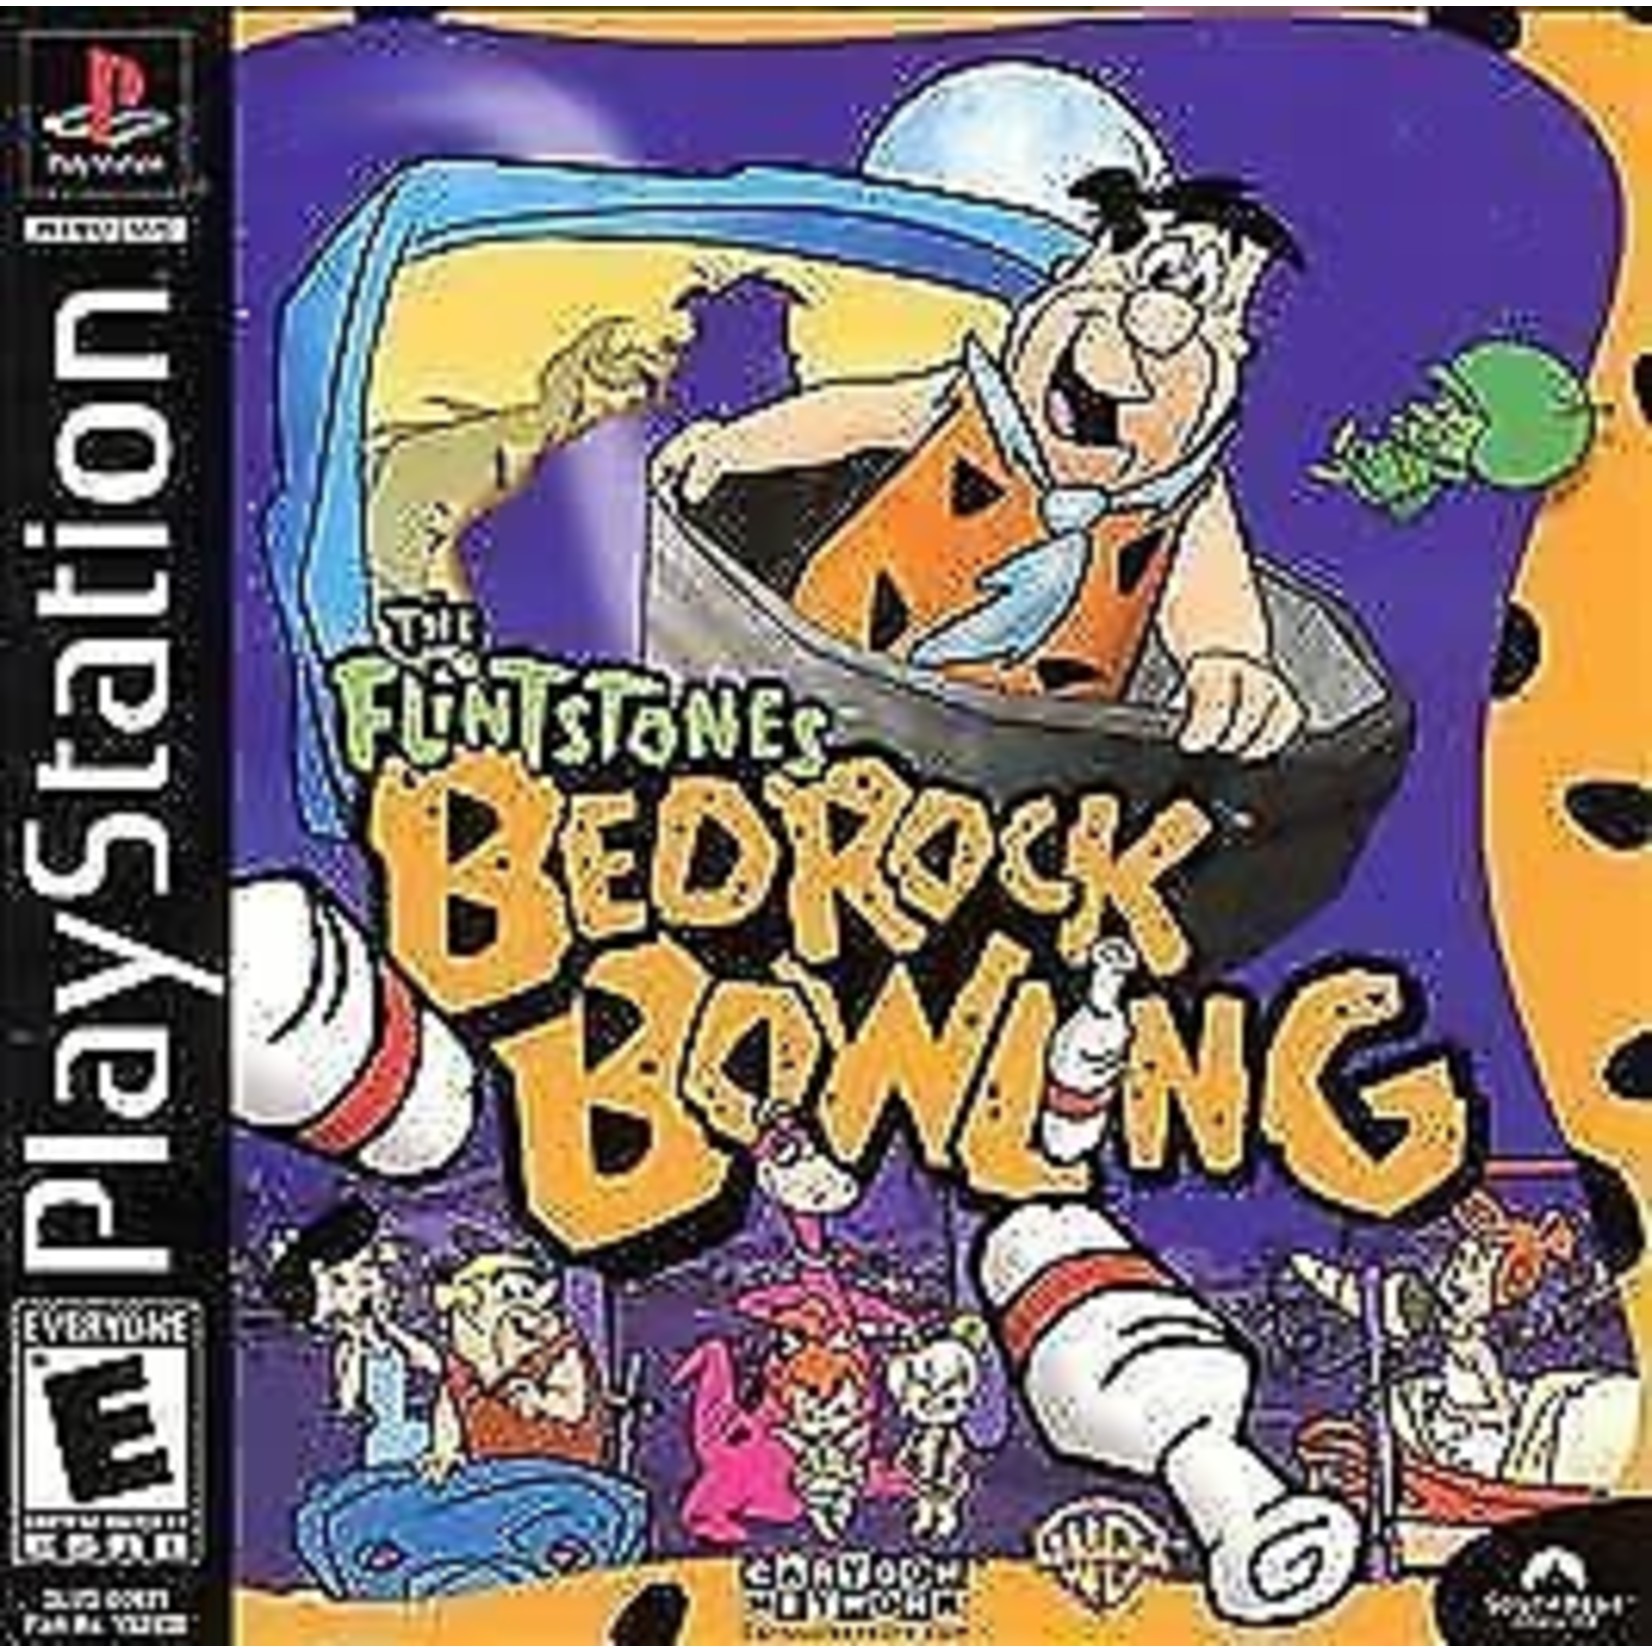 PS1U-The Flintstones Bedrock Bowling